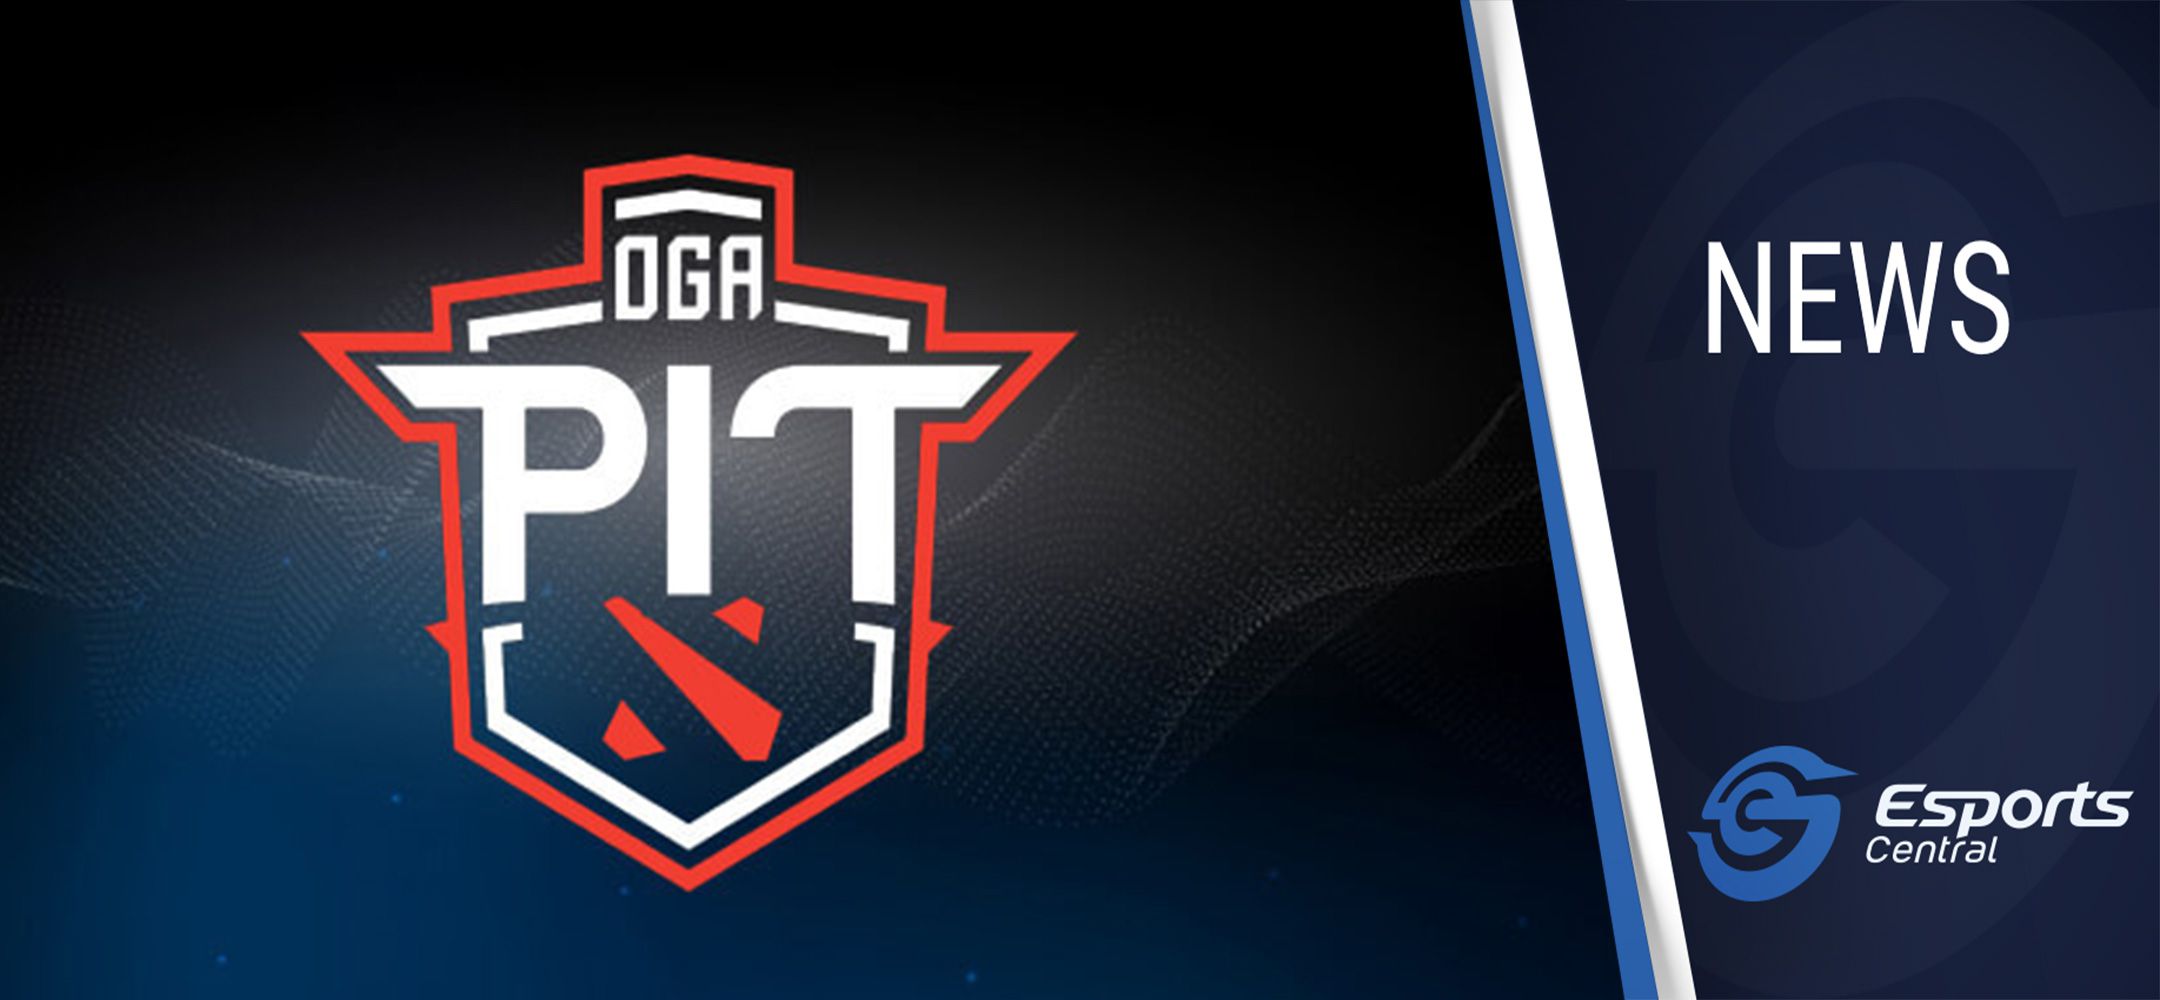 OGA Dota PIT Season 3 Europe and CIS tournament announced - Esports Central